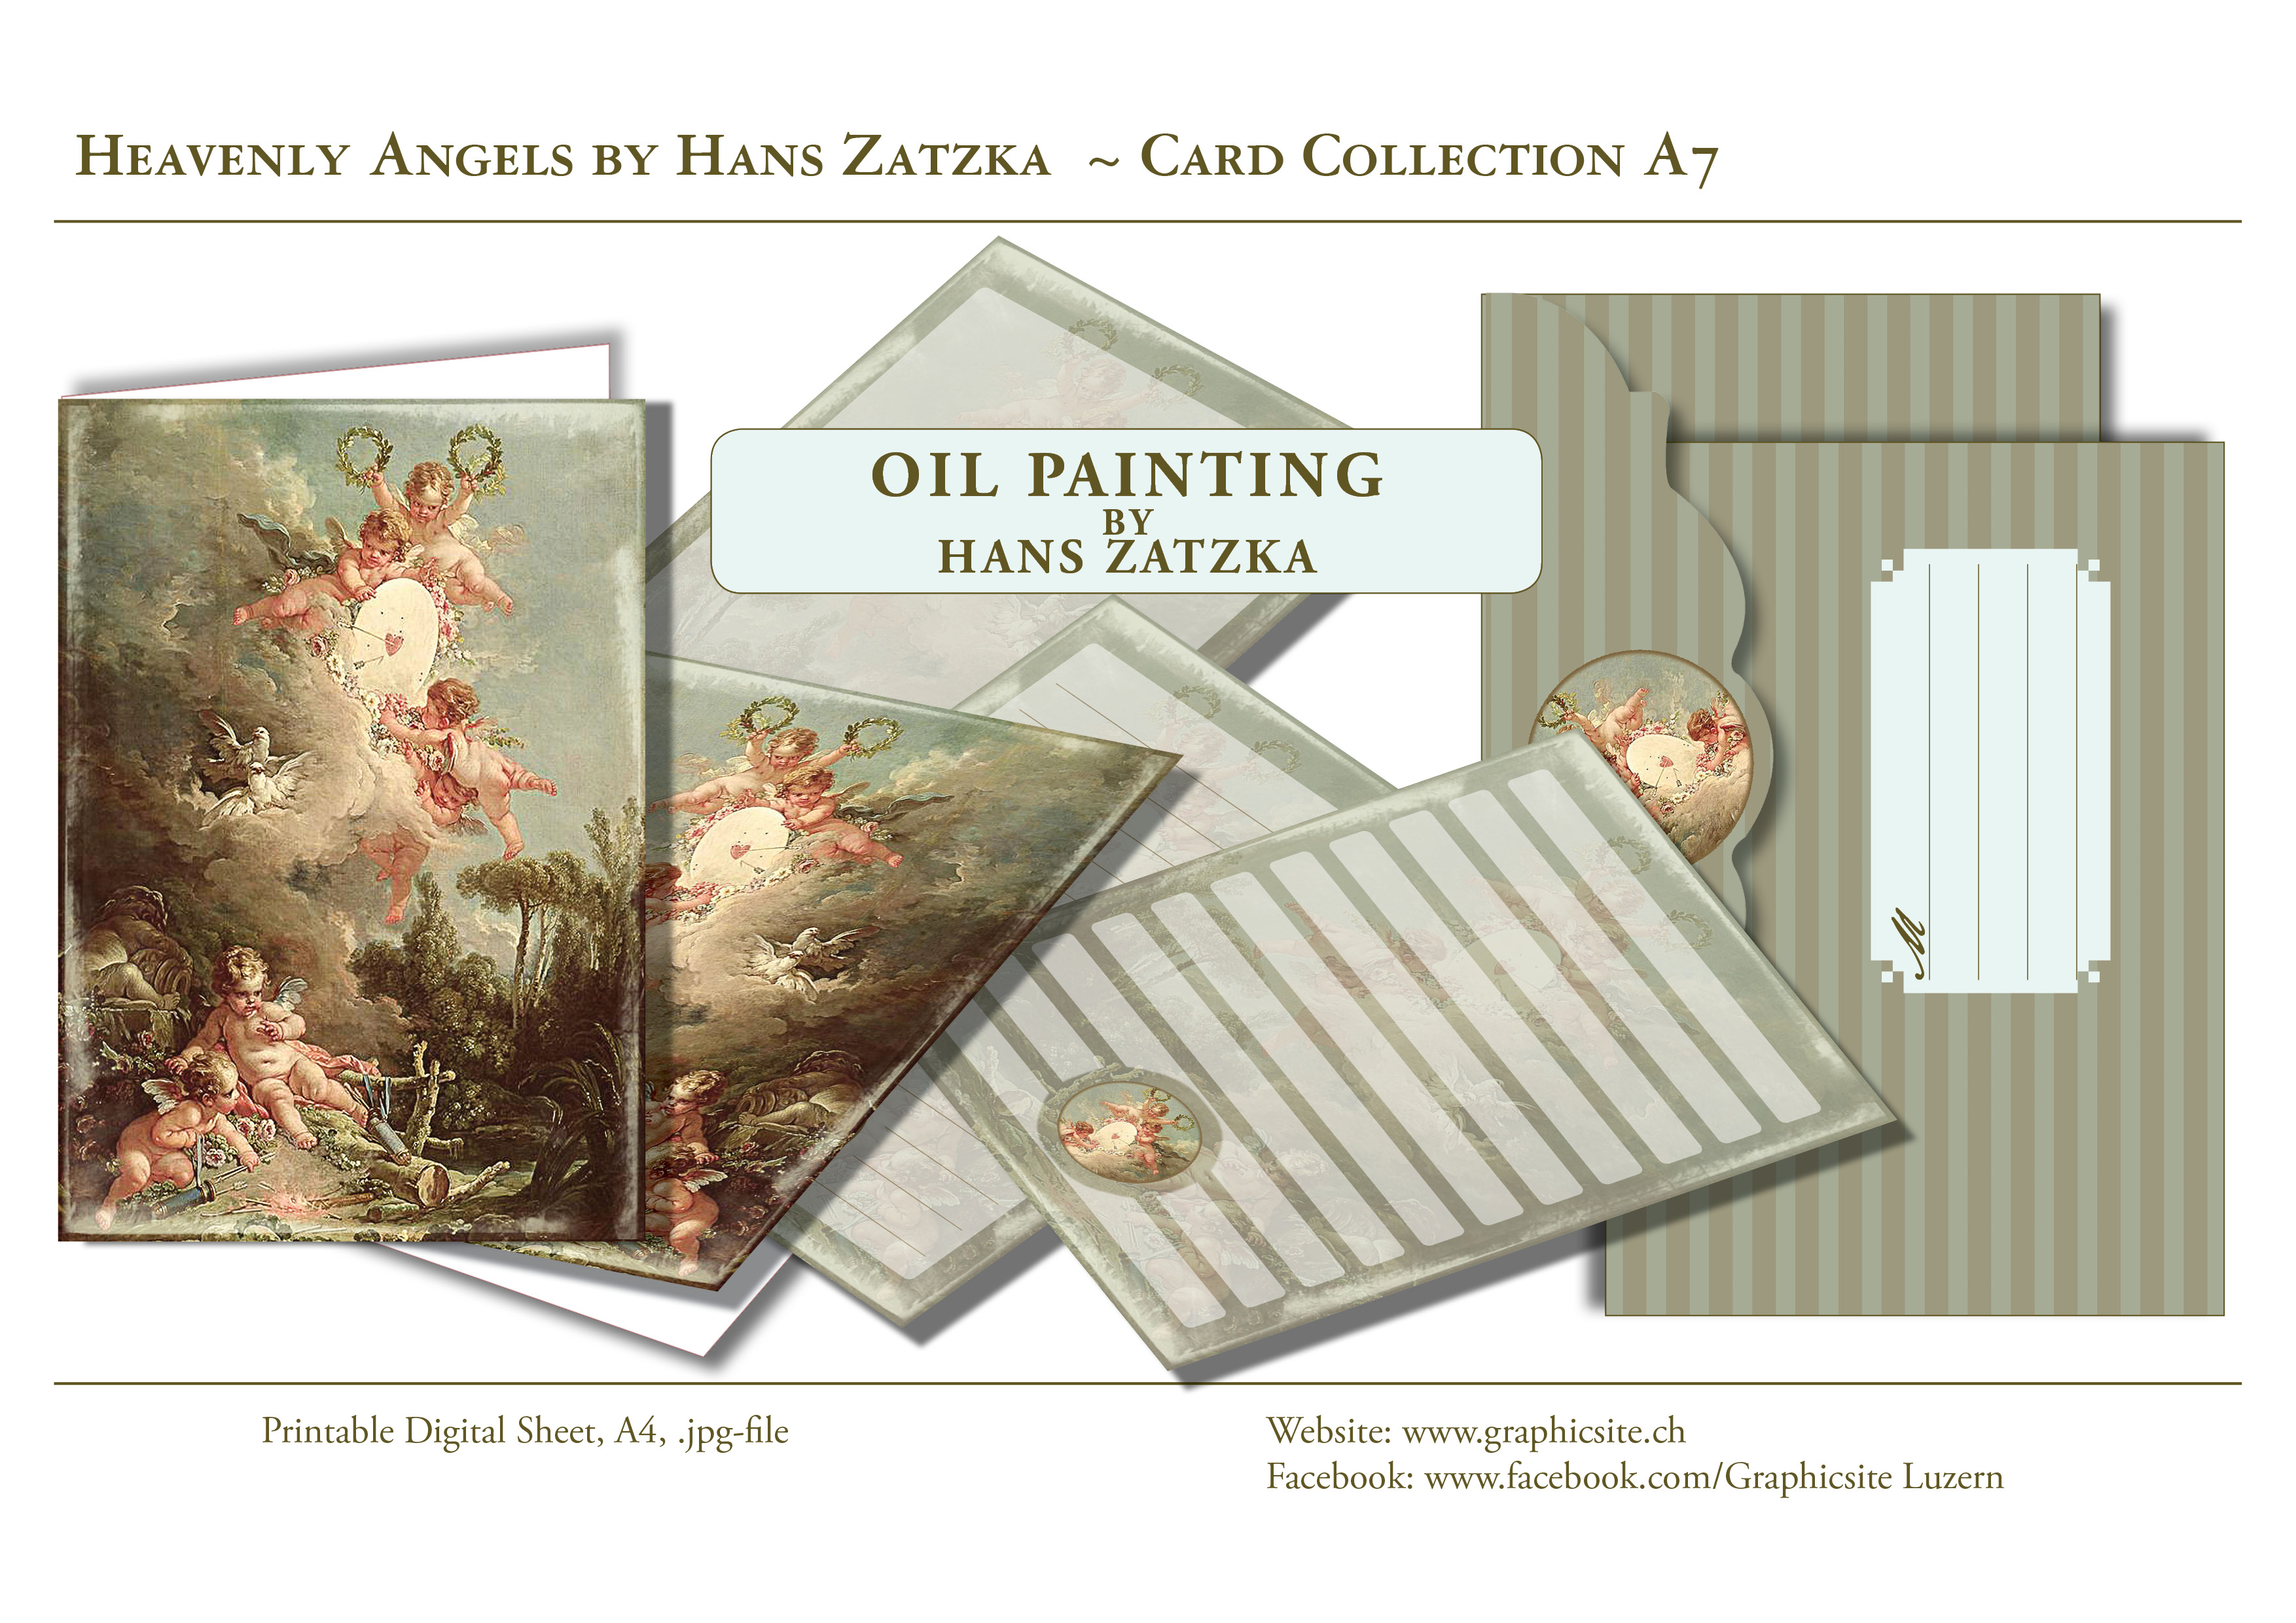 Printable Digital Sheets - Card Collection A7 - Heavenly Angels - Hans Zatzka, ArtPainter, Oil Paintings, Graphic Design, Luzern,